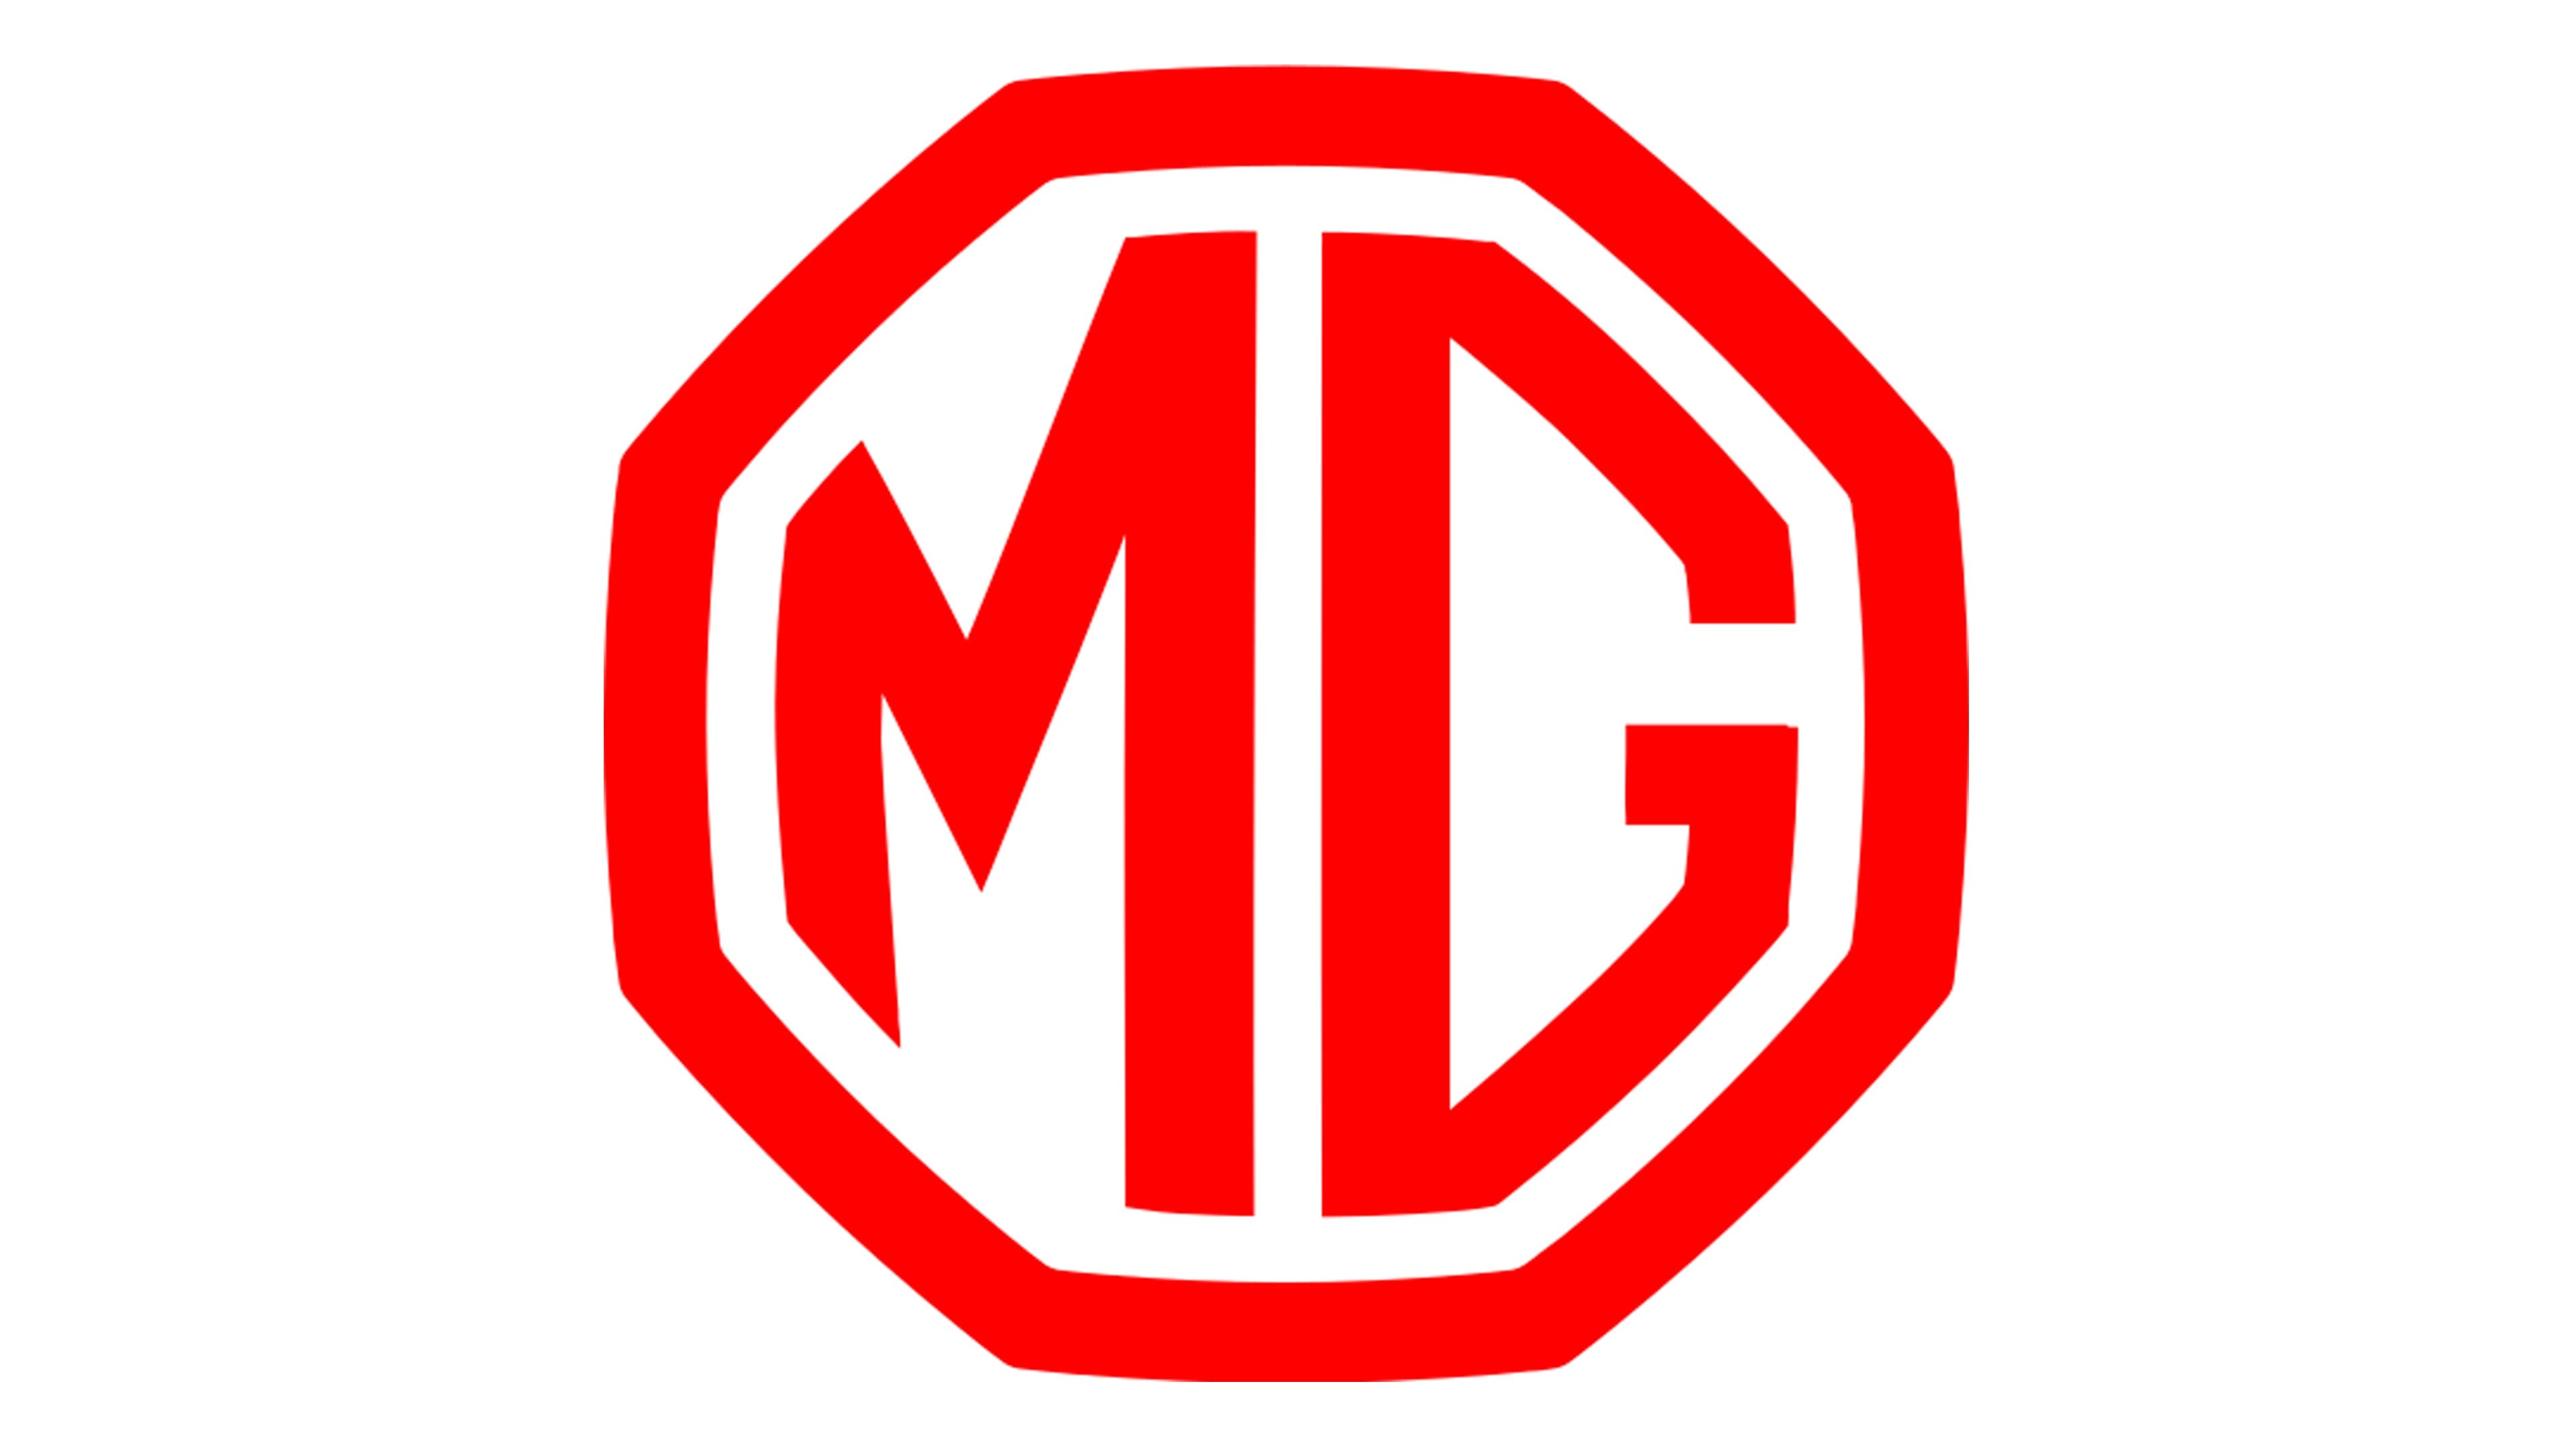 MG M G Letter Logo Design. Initial Letter MG Linked Circle Uppercase Monogram  Logo Red and Blue. MG Logo, M G Design Stock Vector - Illustration of  capital, logotype: 190773413